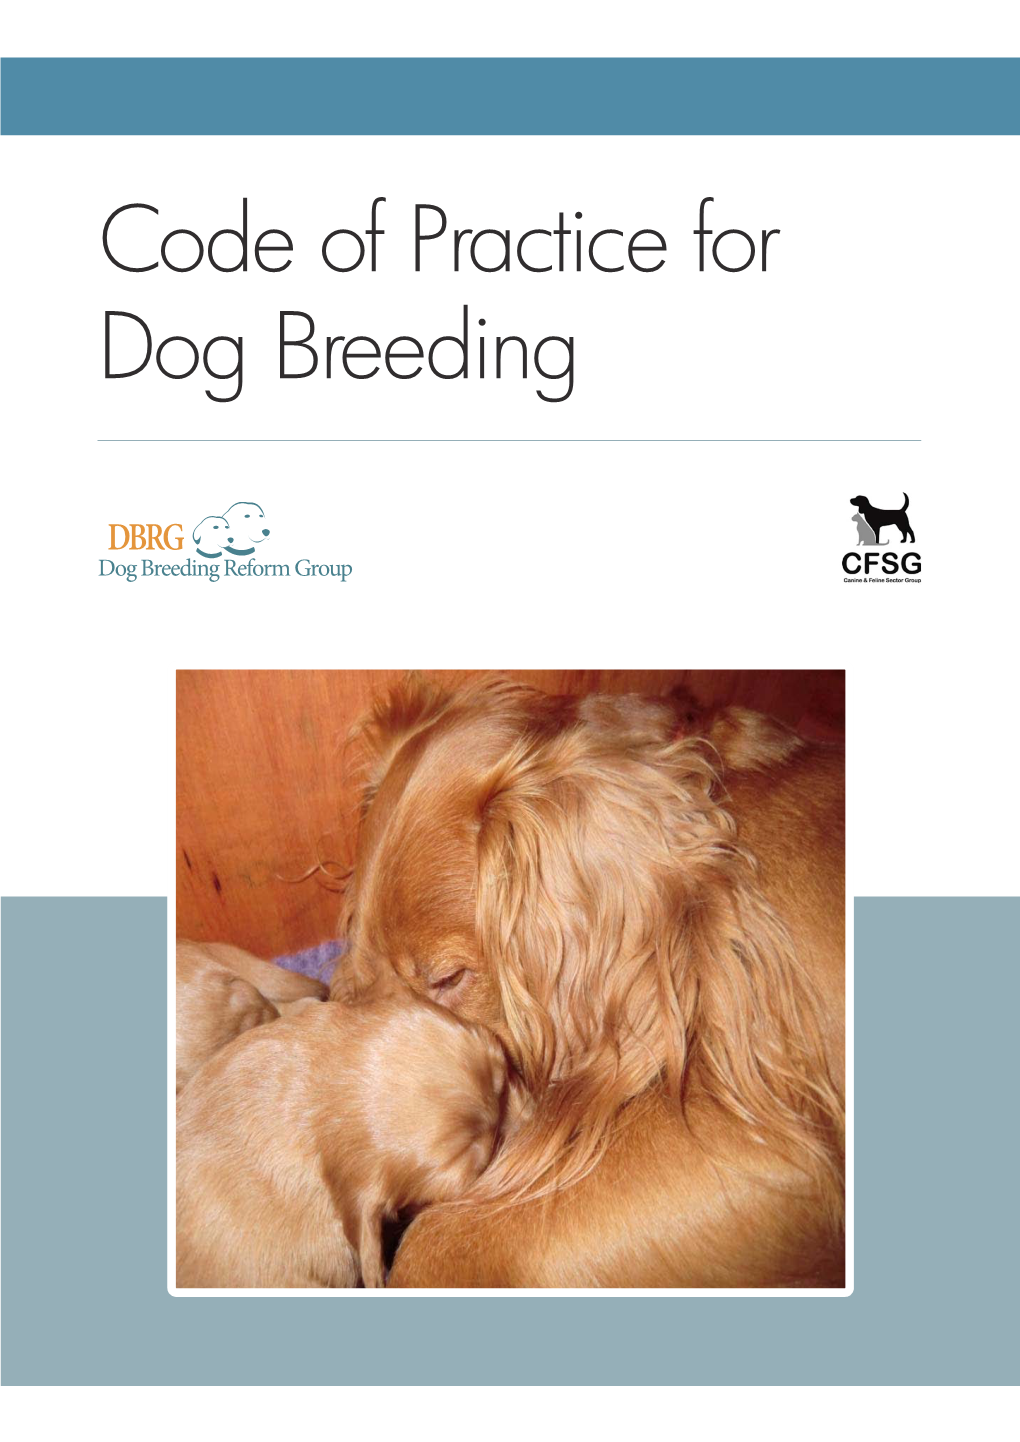 Code of Practice for Dog Breeding 2020